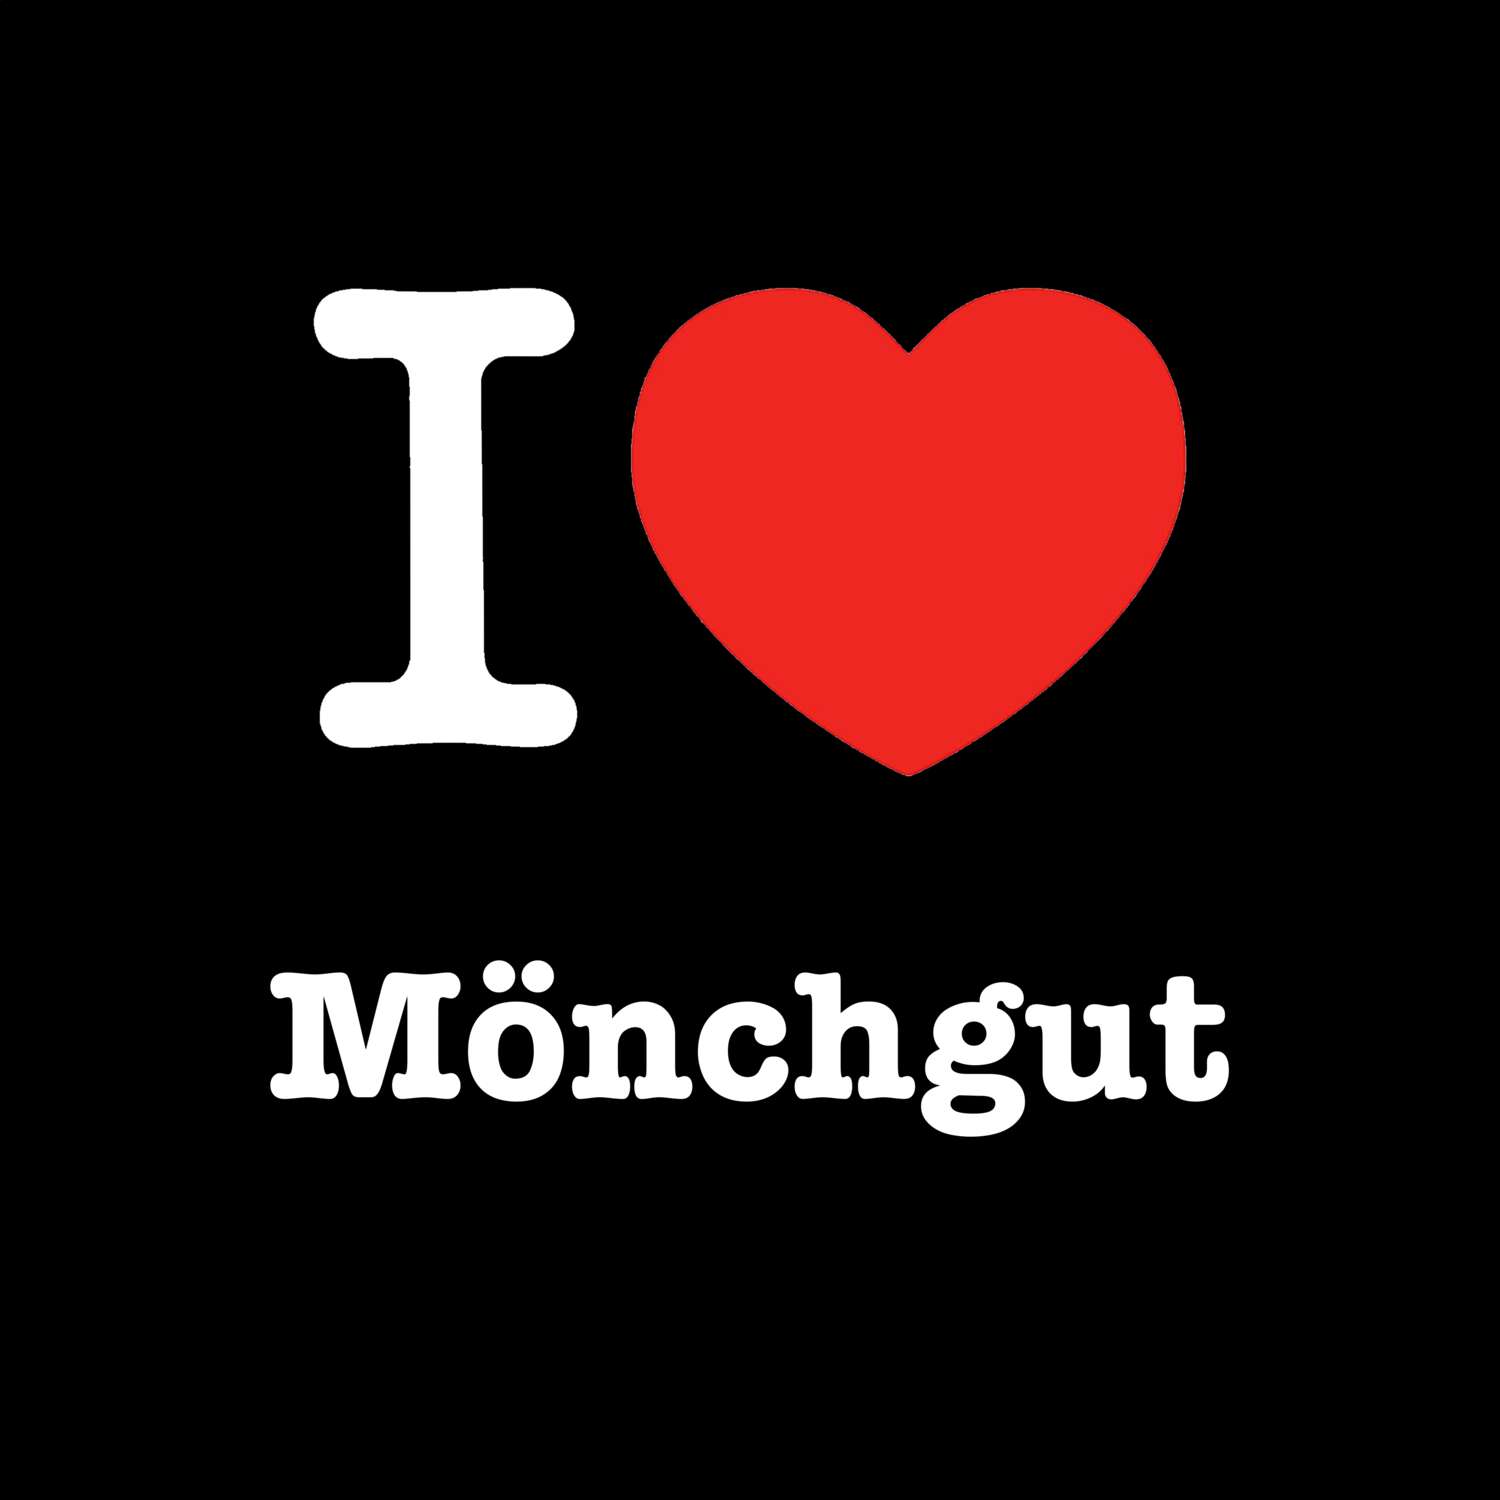 Mönchgut T-Shirt »I love«